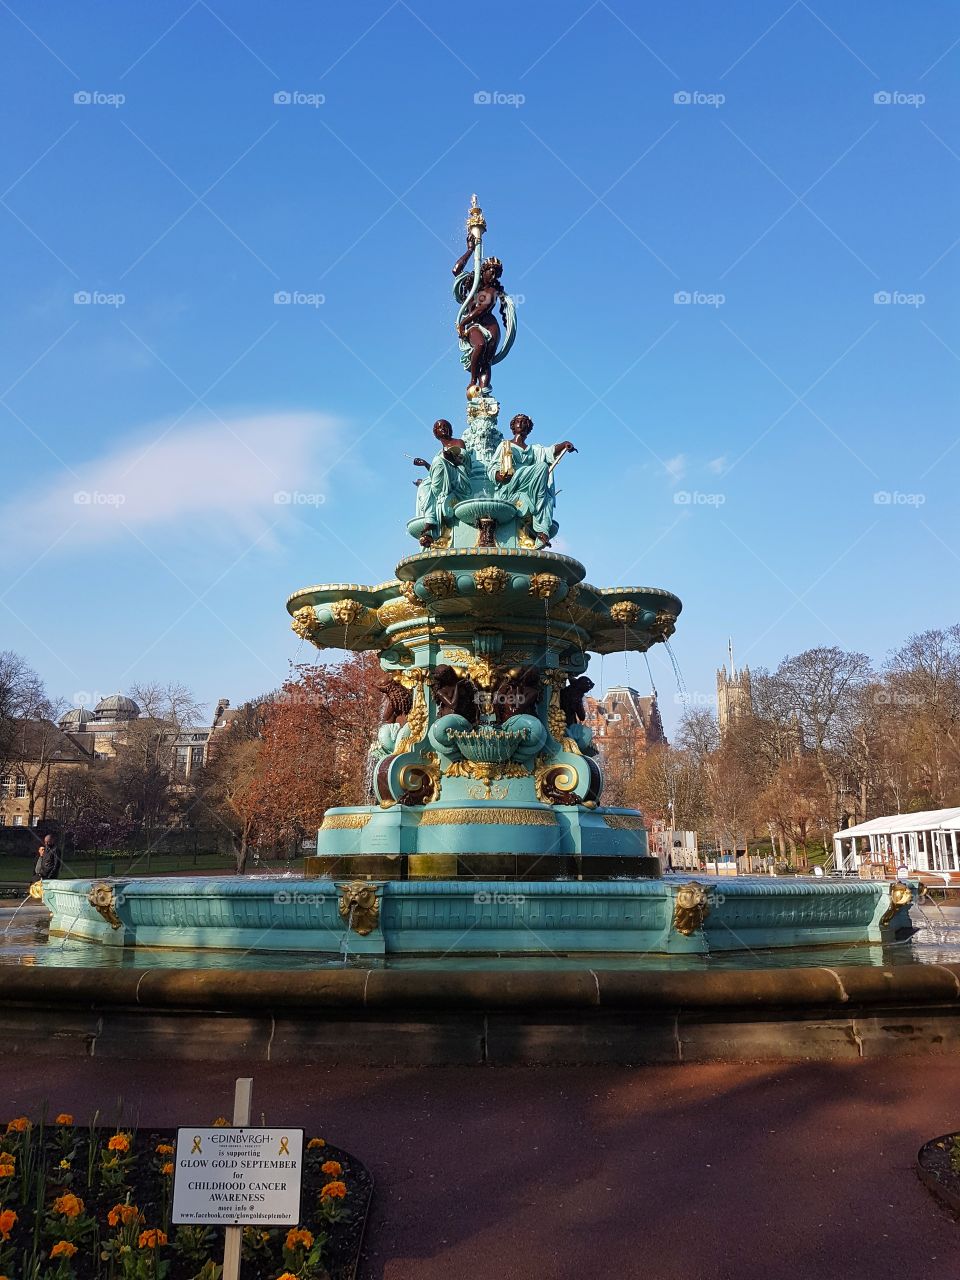 Edinburgh's fountain